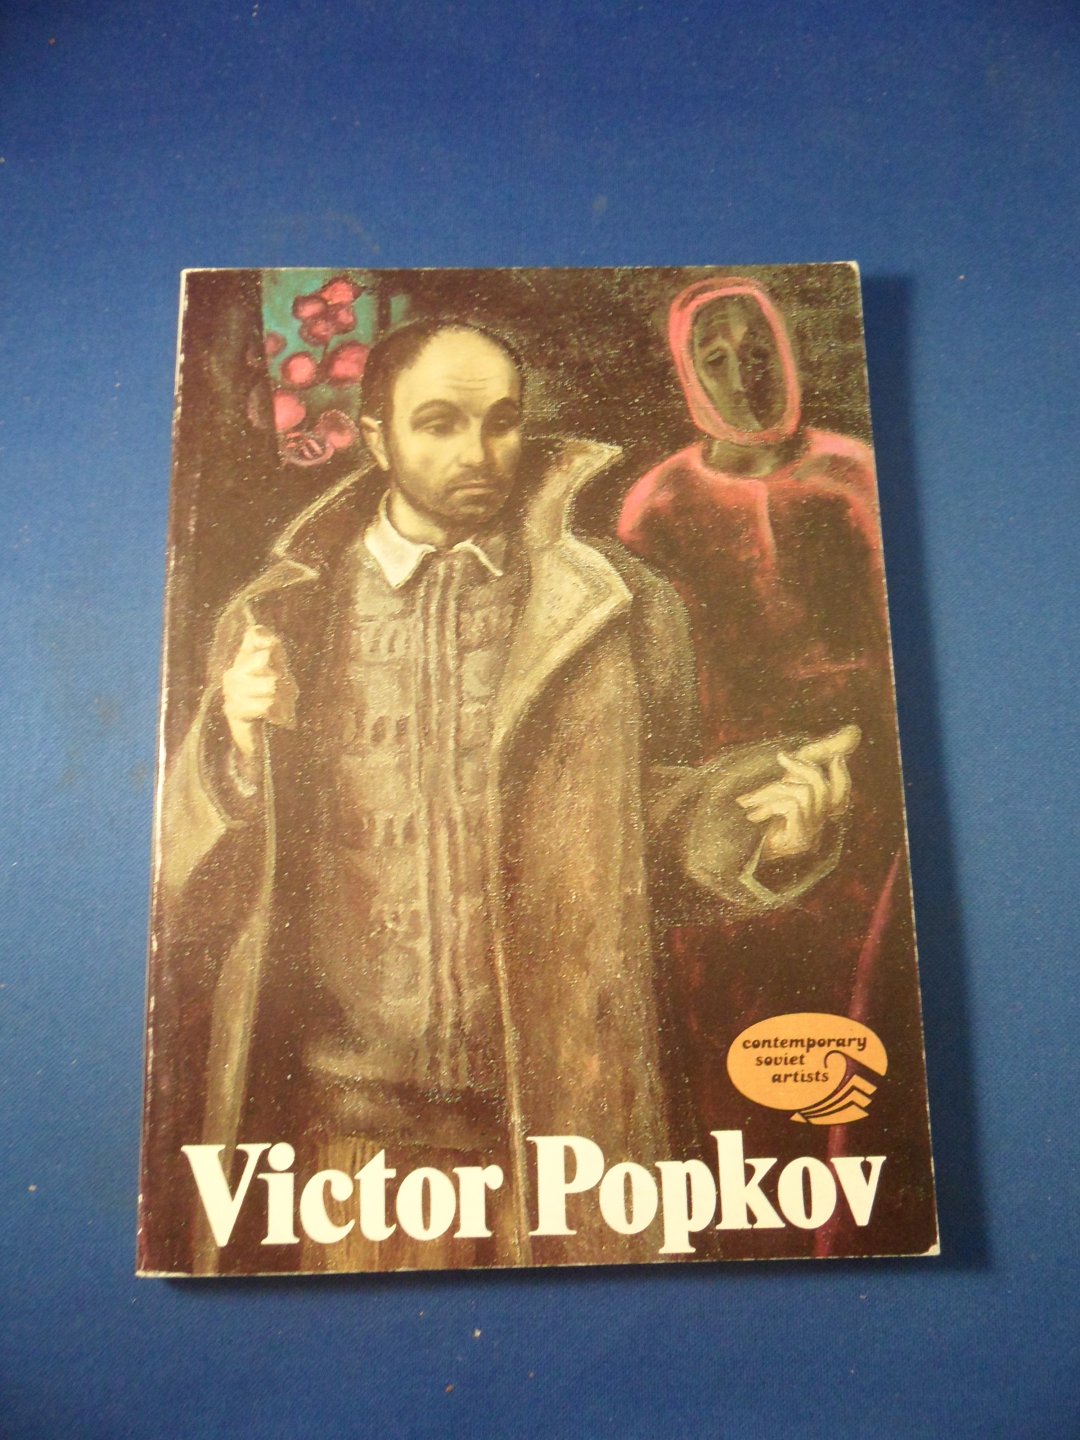 Kisunko, Vasaly - Victor Popkov. contemporary soviet artists